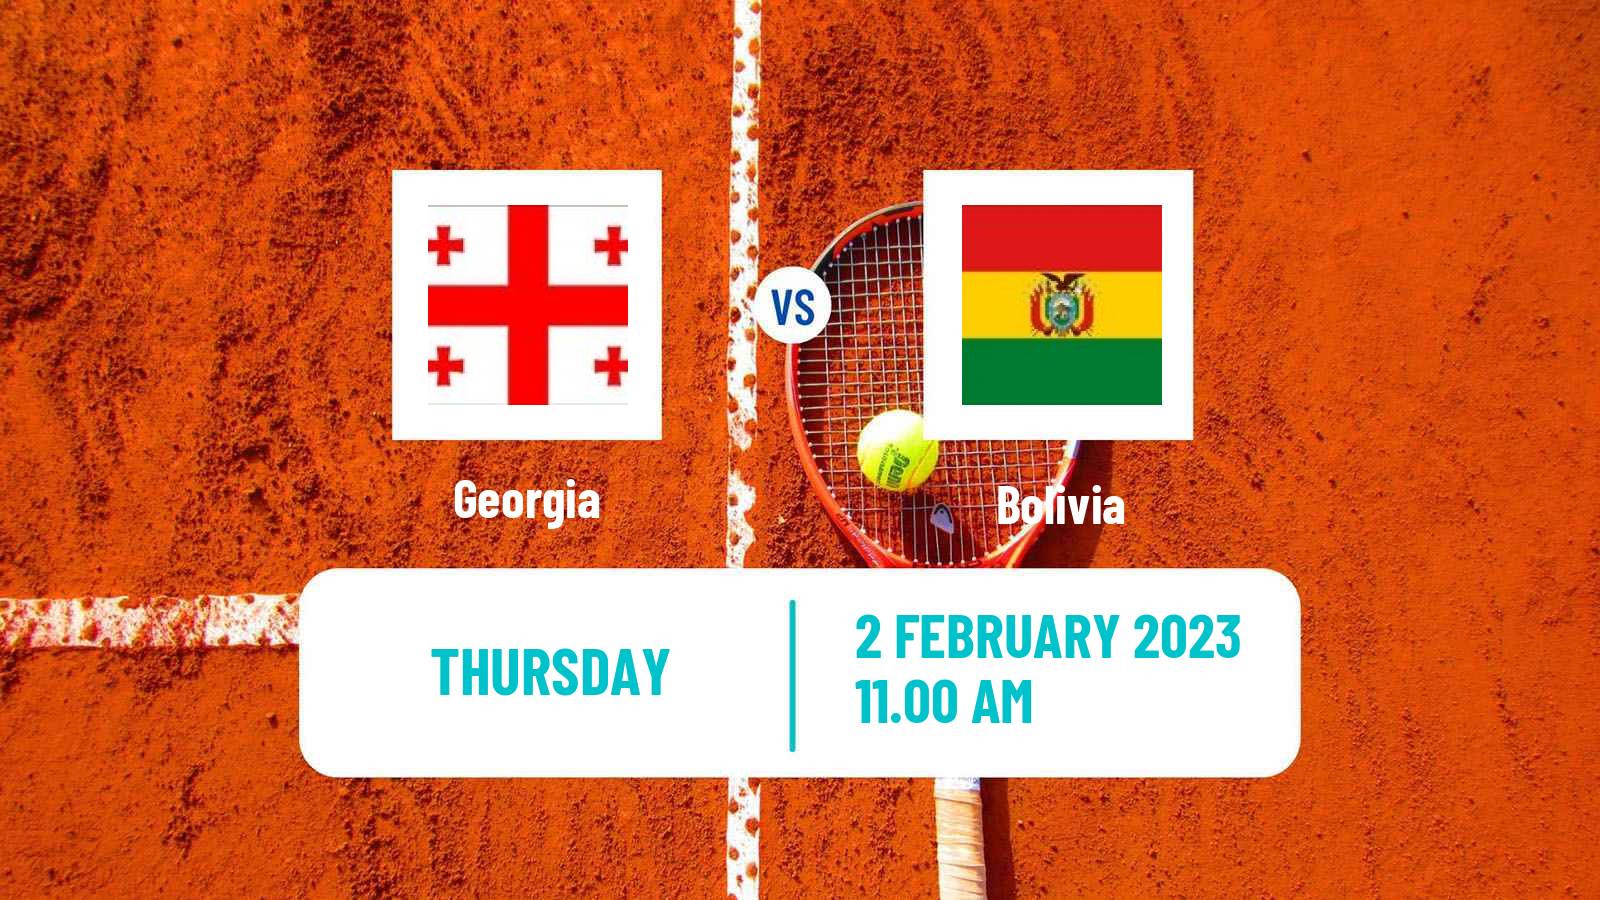 Tennis Davis Cup World Group II Teams Georgia - Bolivia